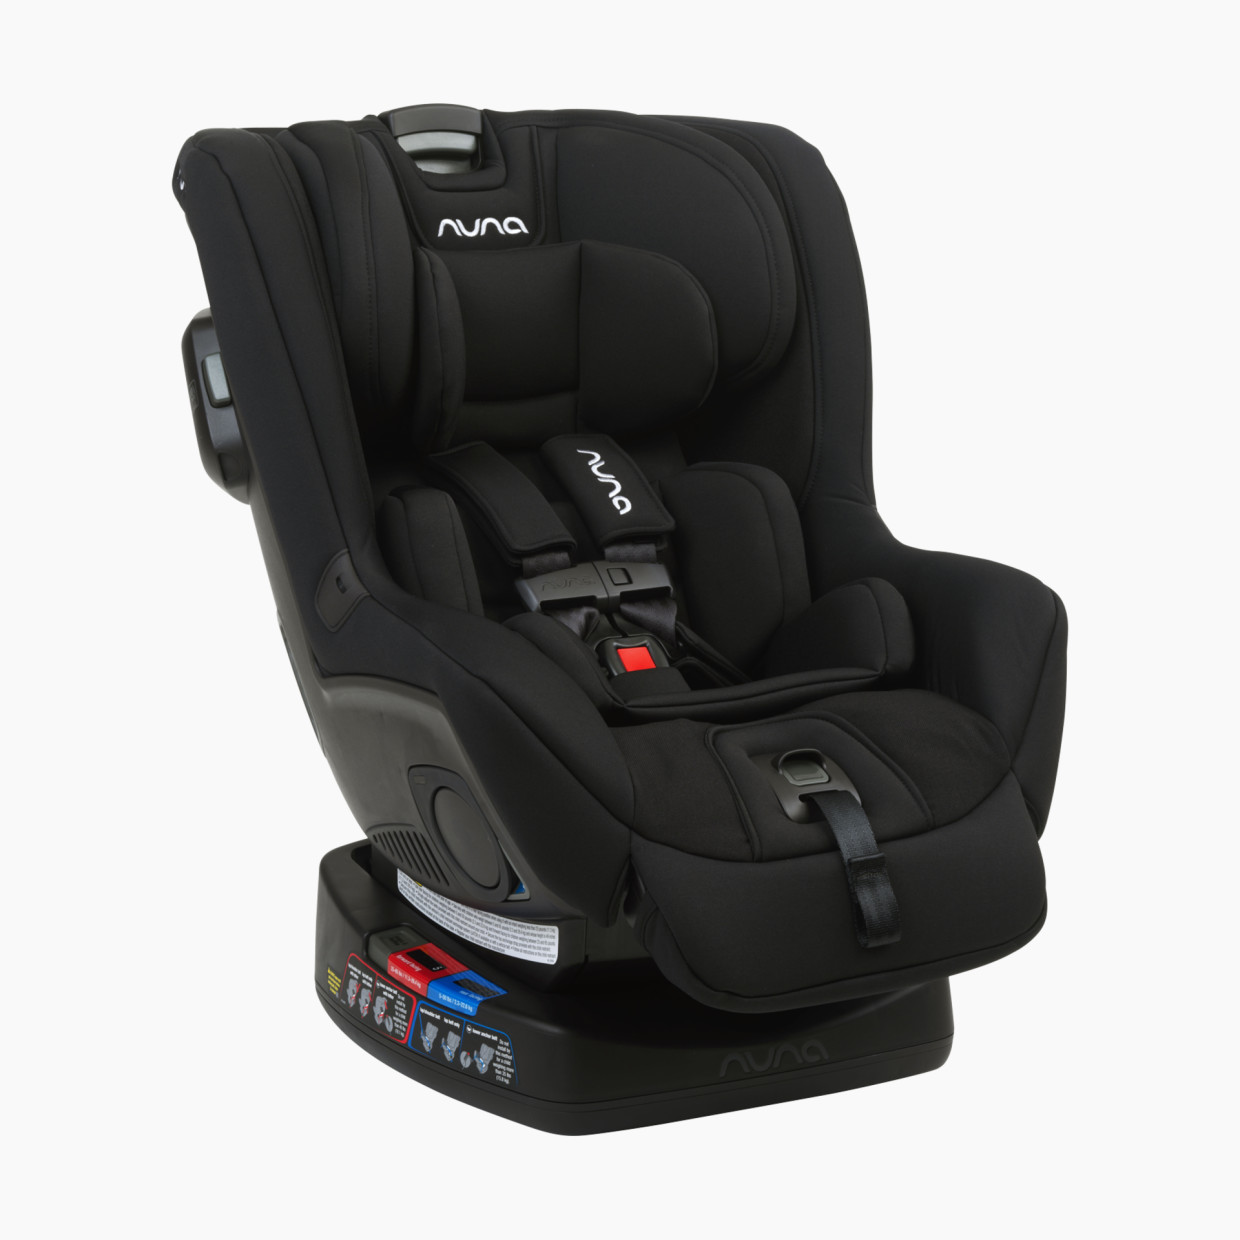 Nuna RAVA Convertible Car Seat - Caviar (2019).